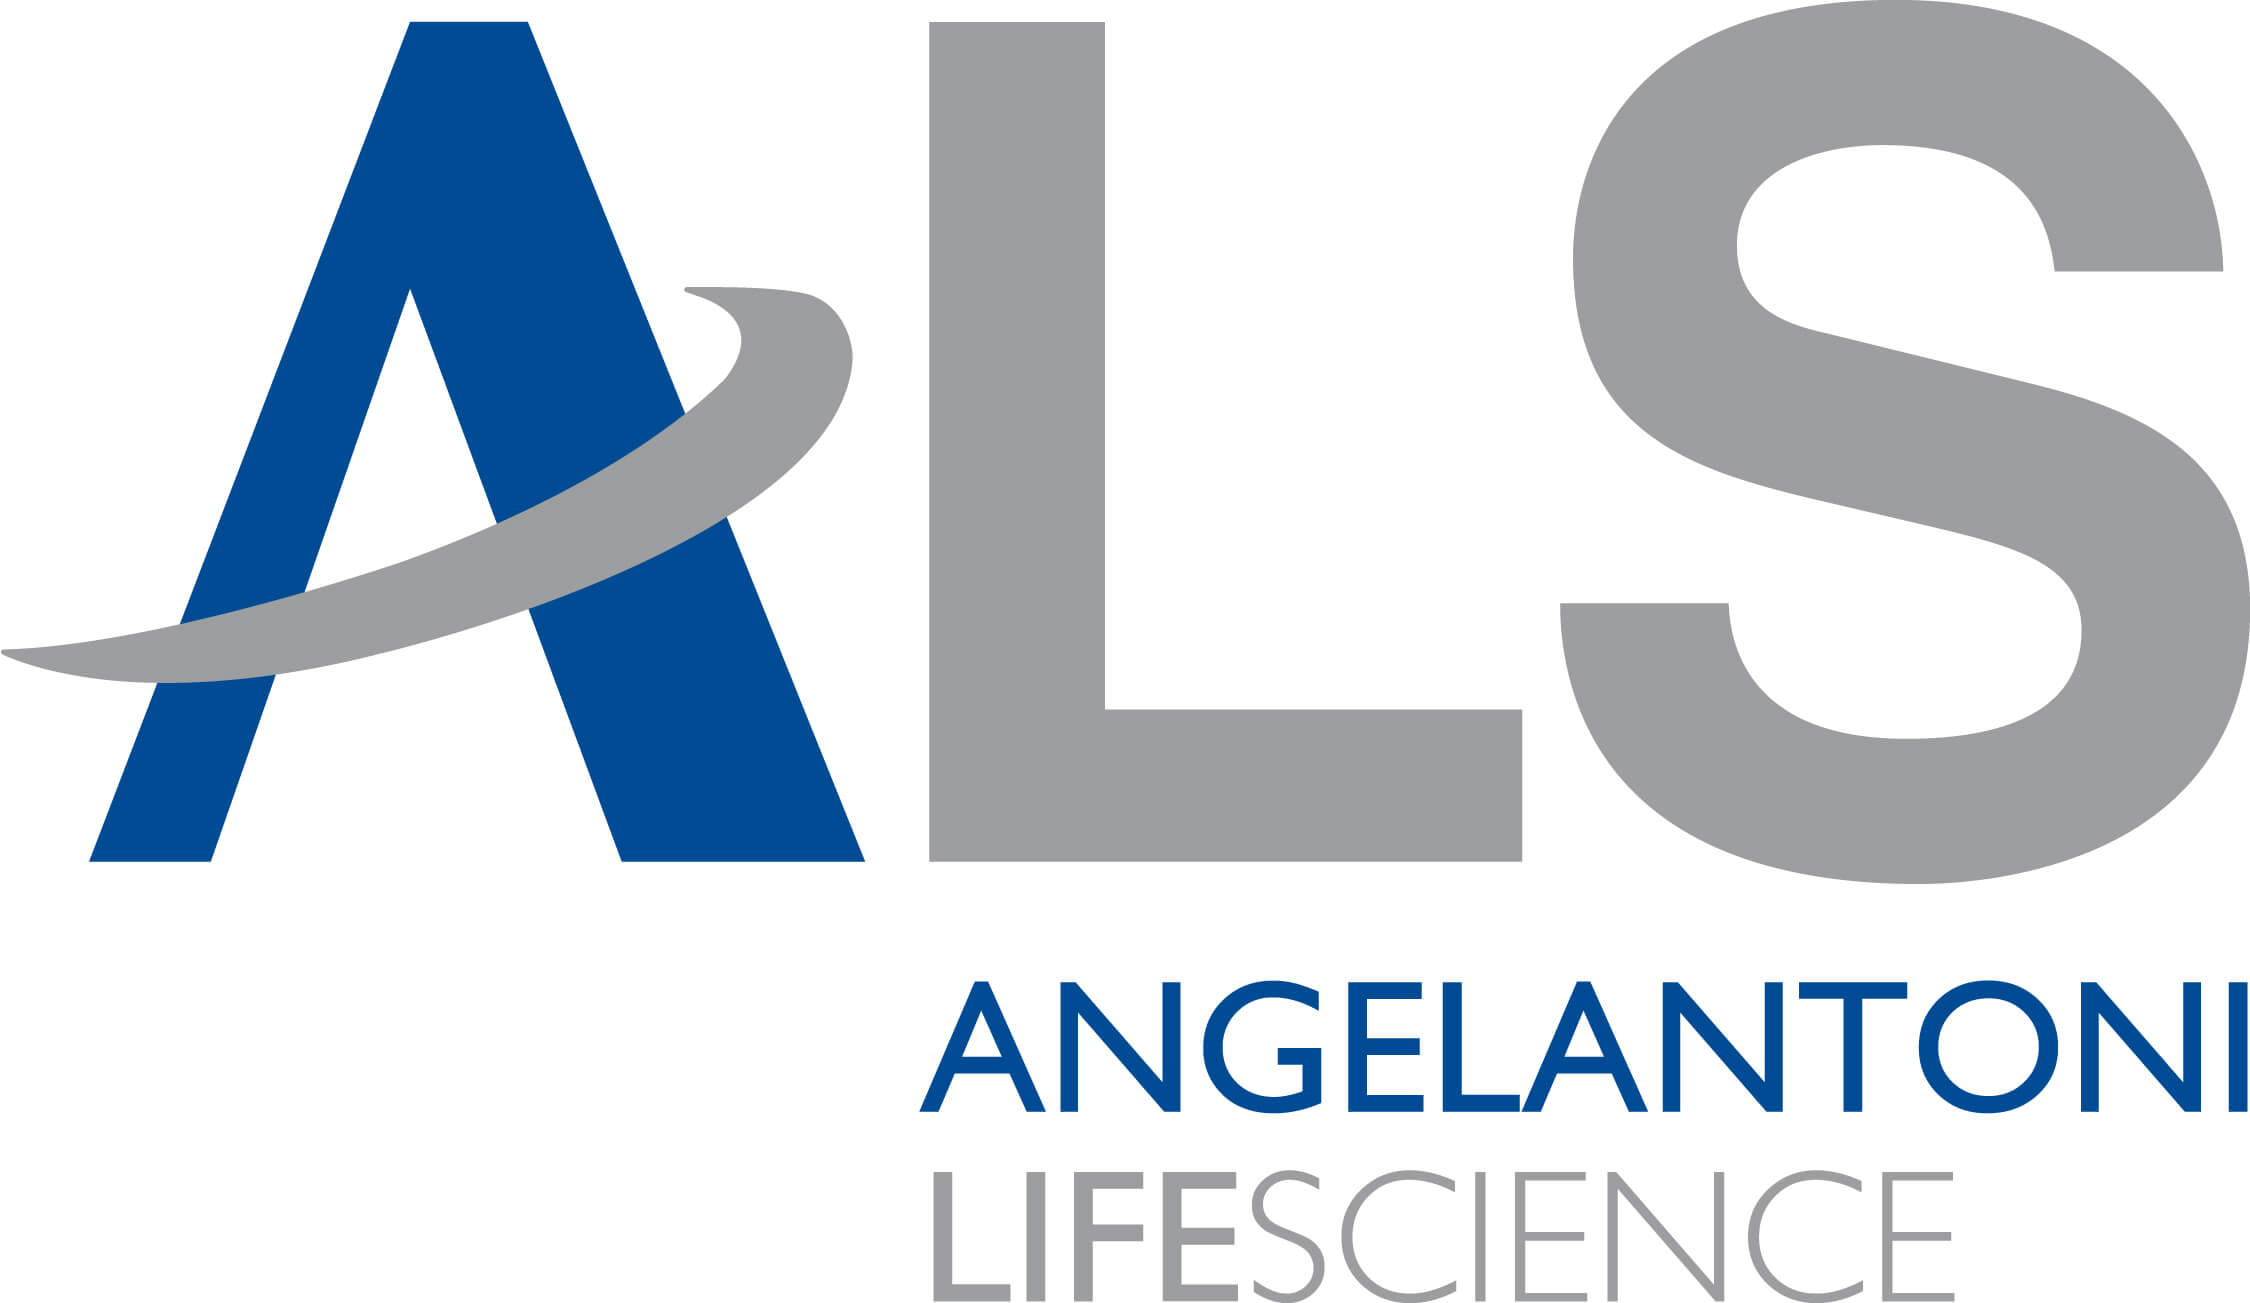 ALS - Angelantoni Life Science